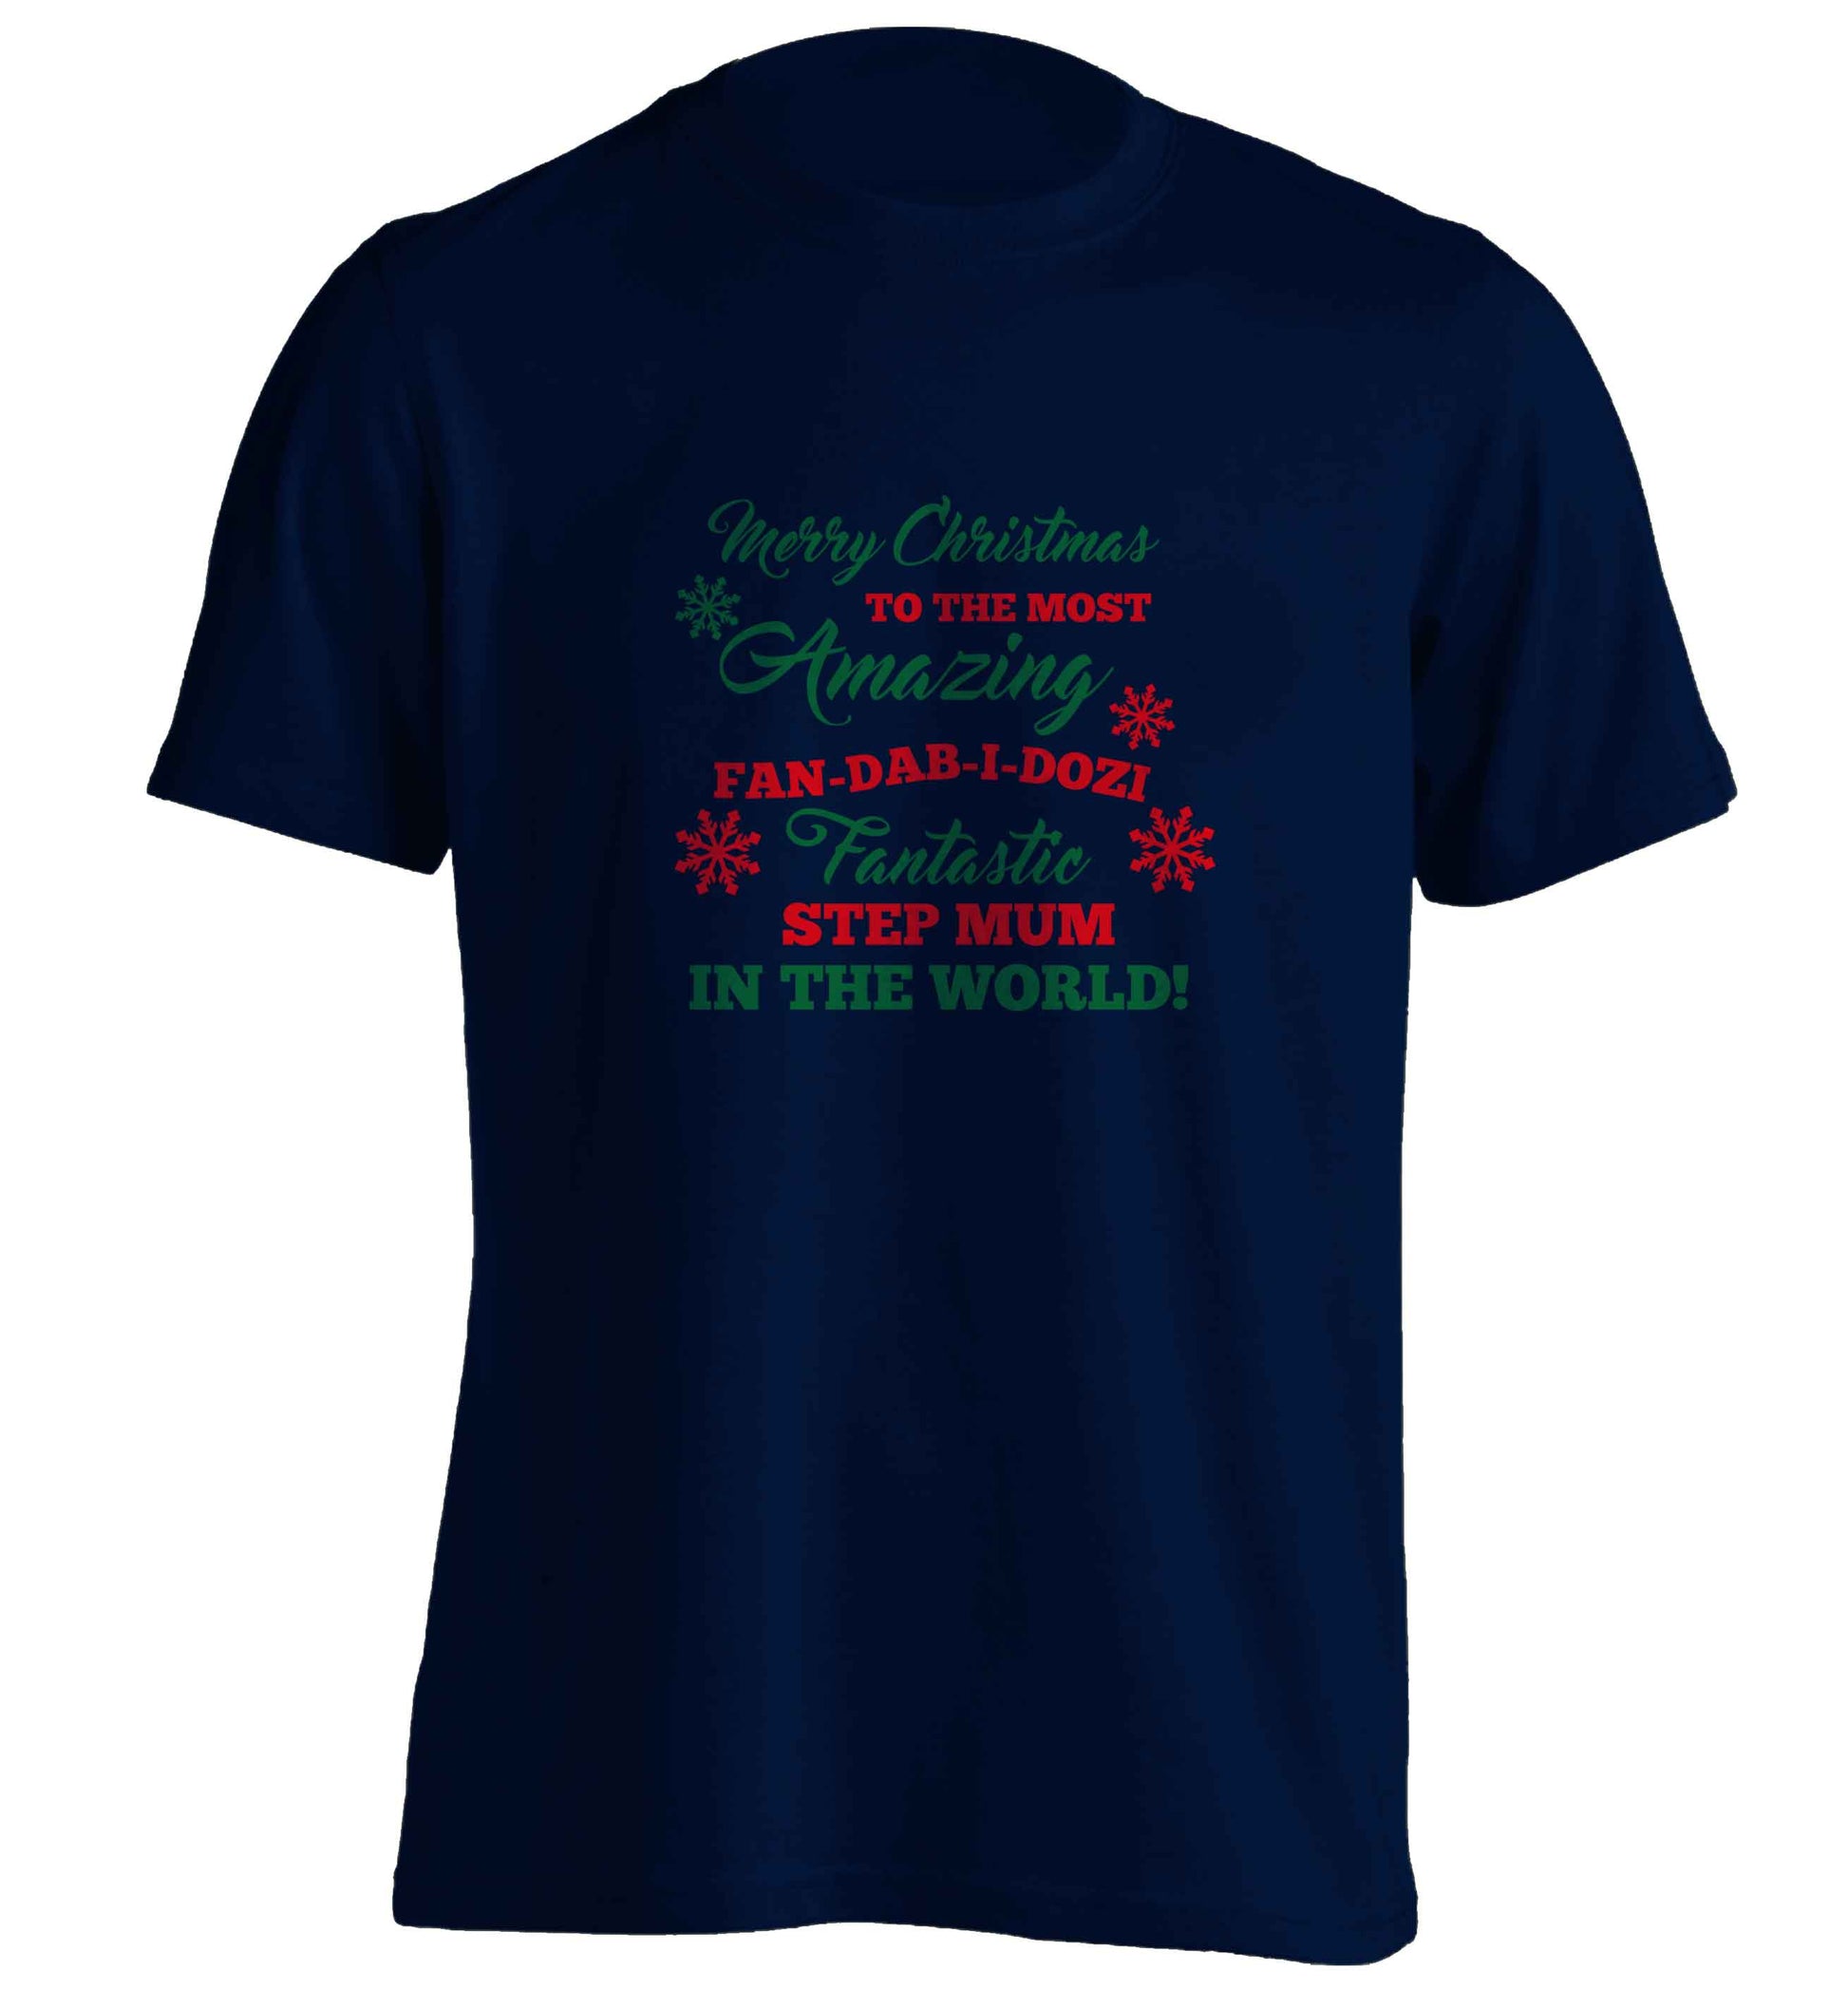 Merry Christmas to the most amazing fan-dab-i-dozi fantasic Step Mum in the world adults unisex navy Tshirt 2XL